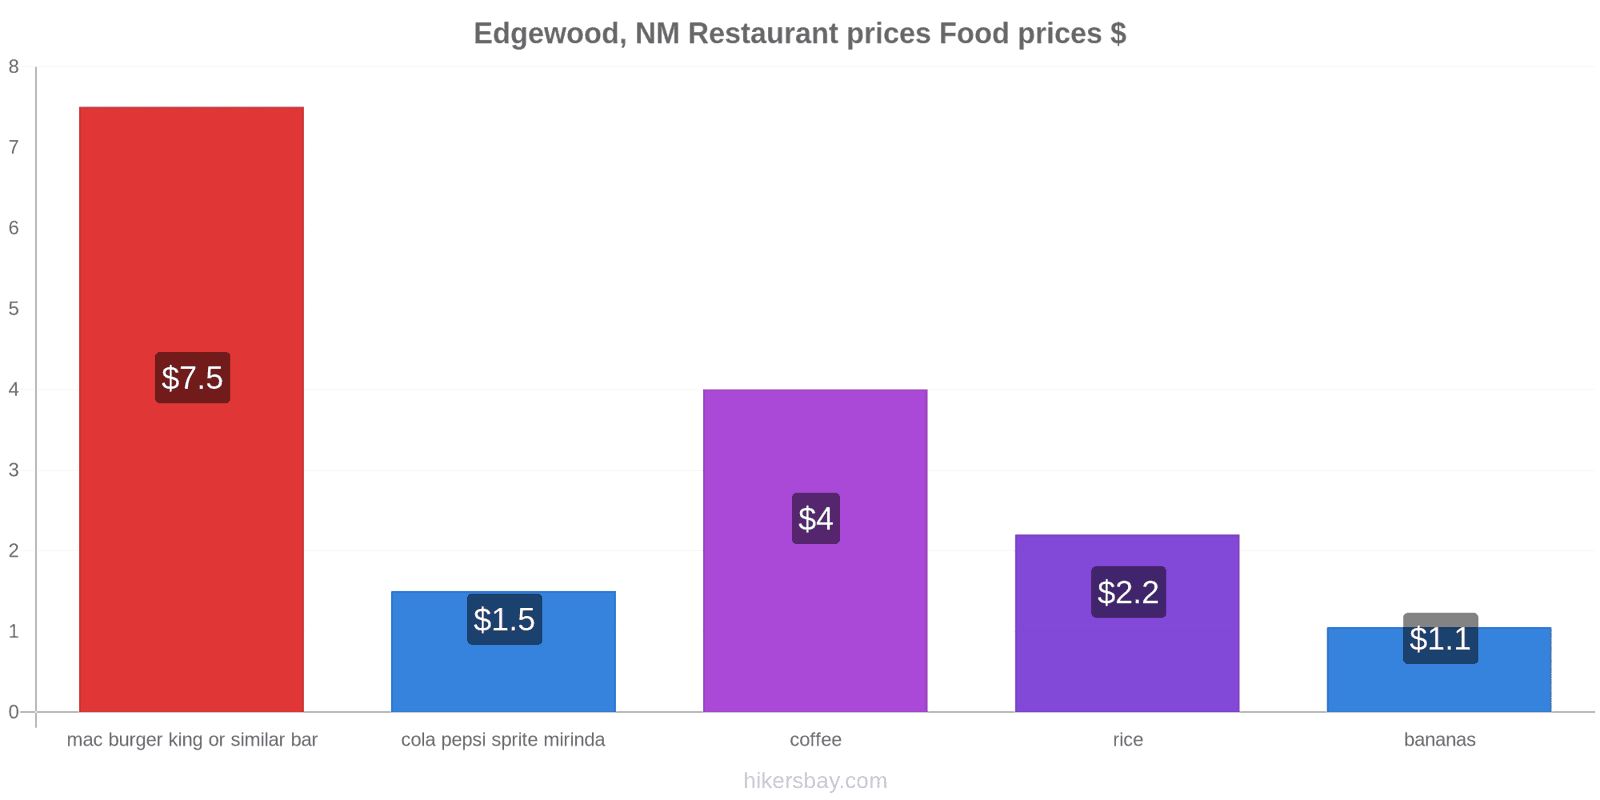 Edgewood, NM price changes hikersbay.com